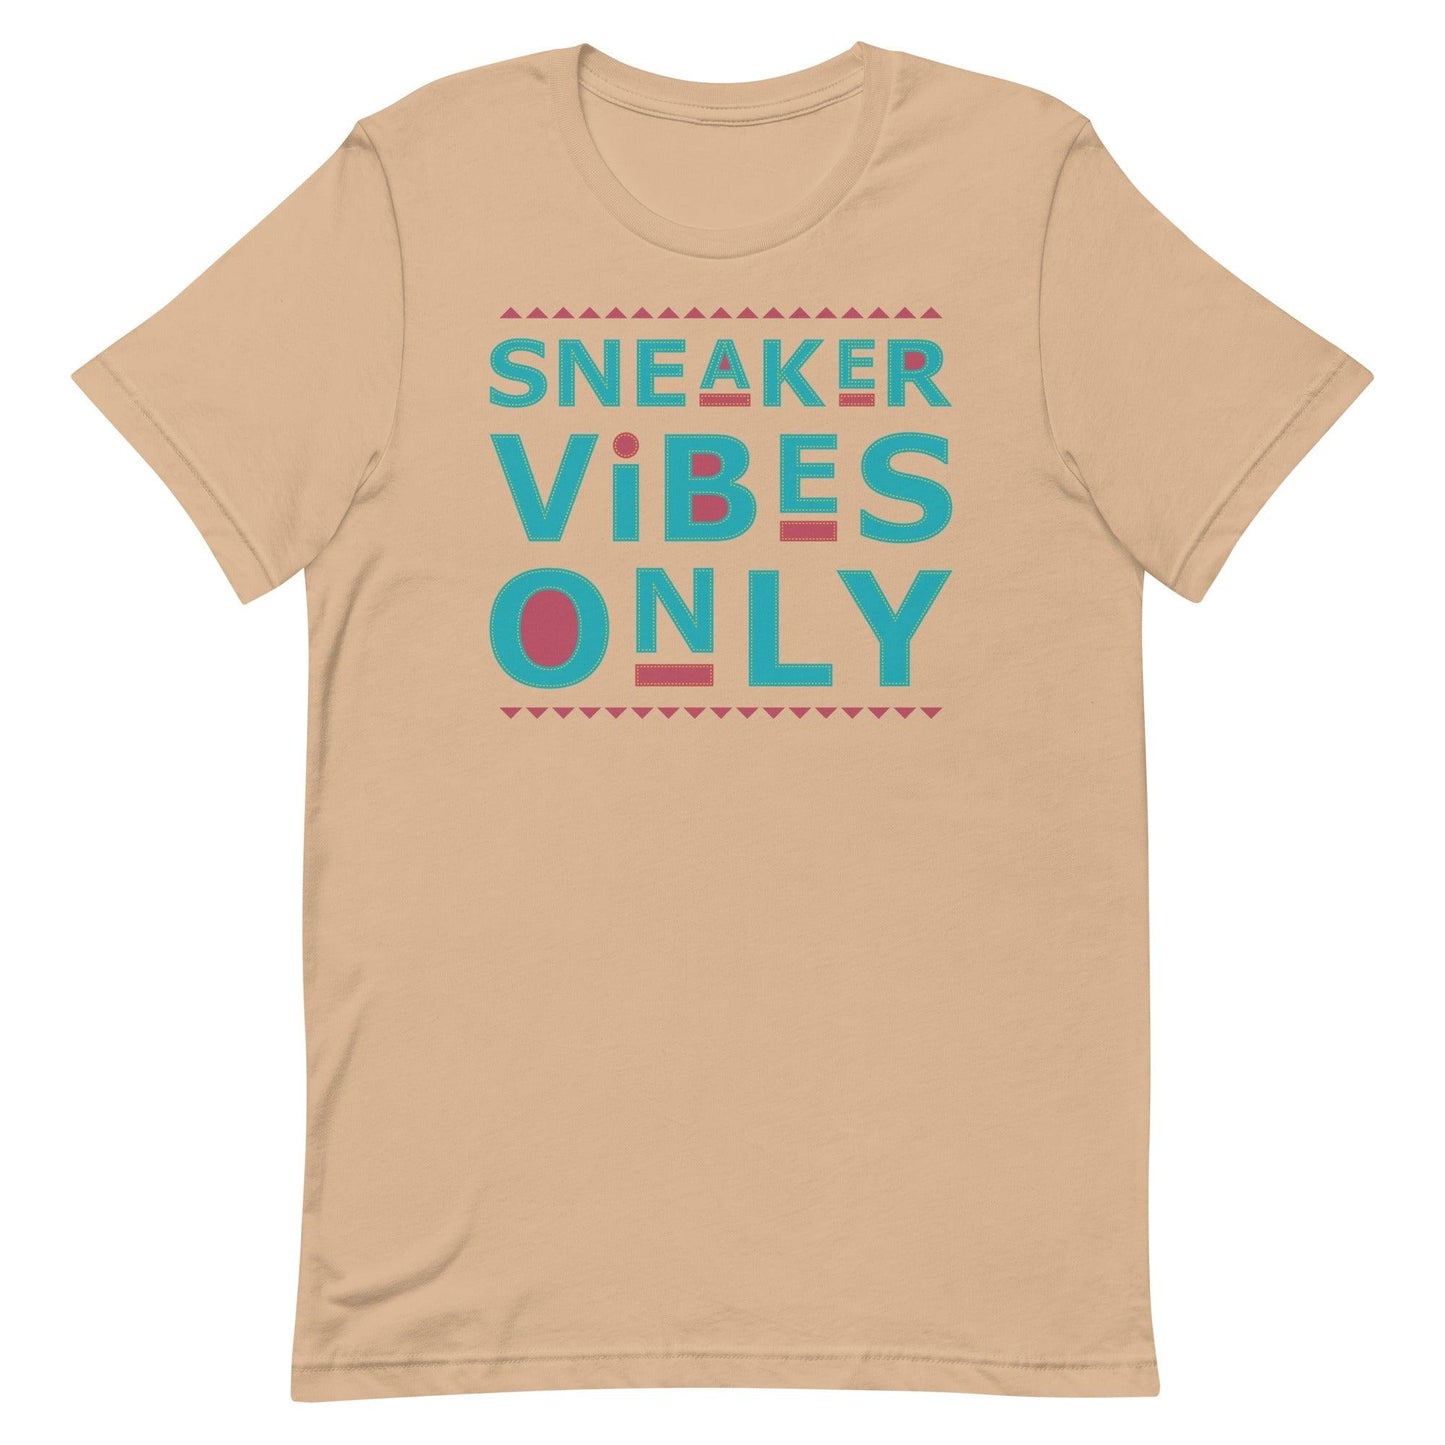 Sneaker Vibes Only Shirt To Match Union LA Nike Cortez Sesame - SNKADX